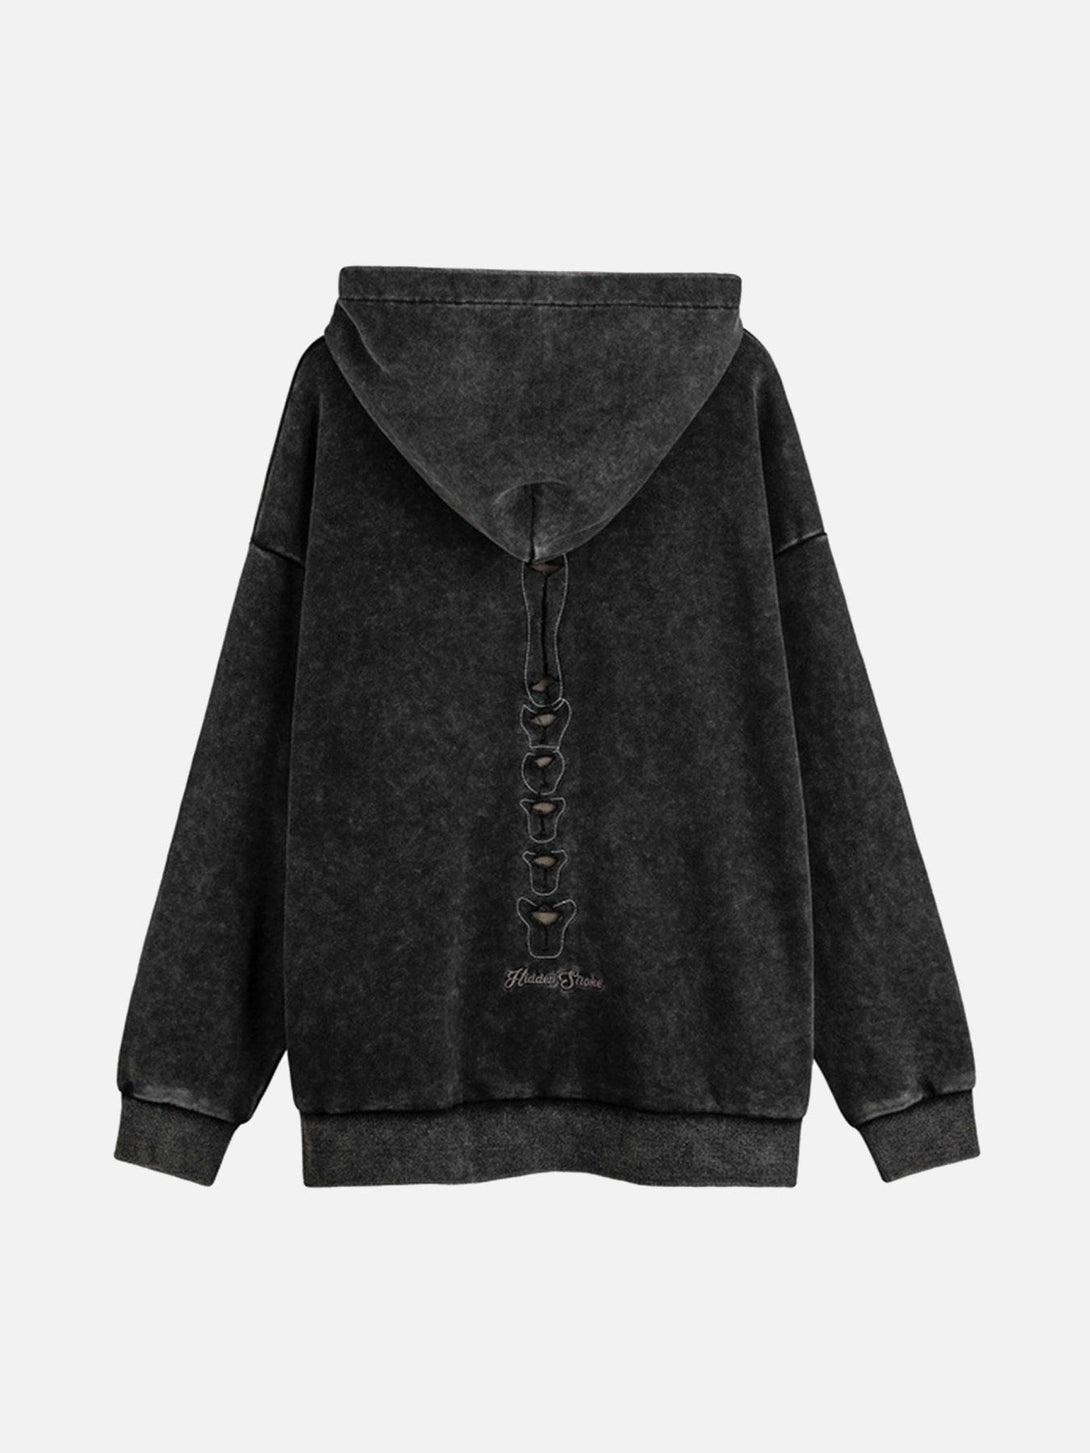 Majesda® - Washed And Aged Hooded Sweatshirt - 1674- Outfit Ideas - Streetwear Fashion - majesda.com